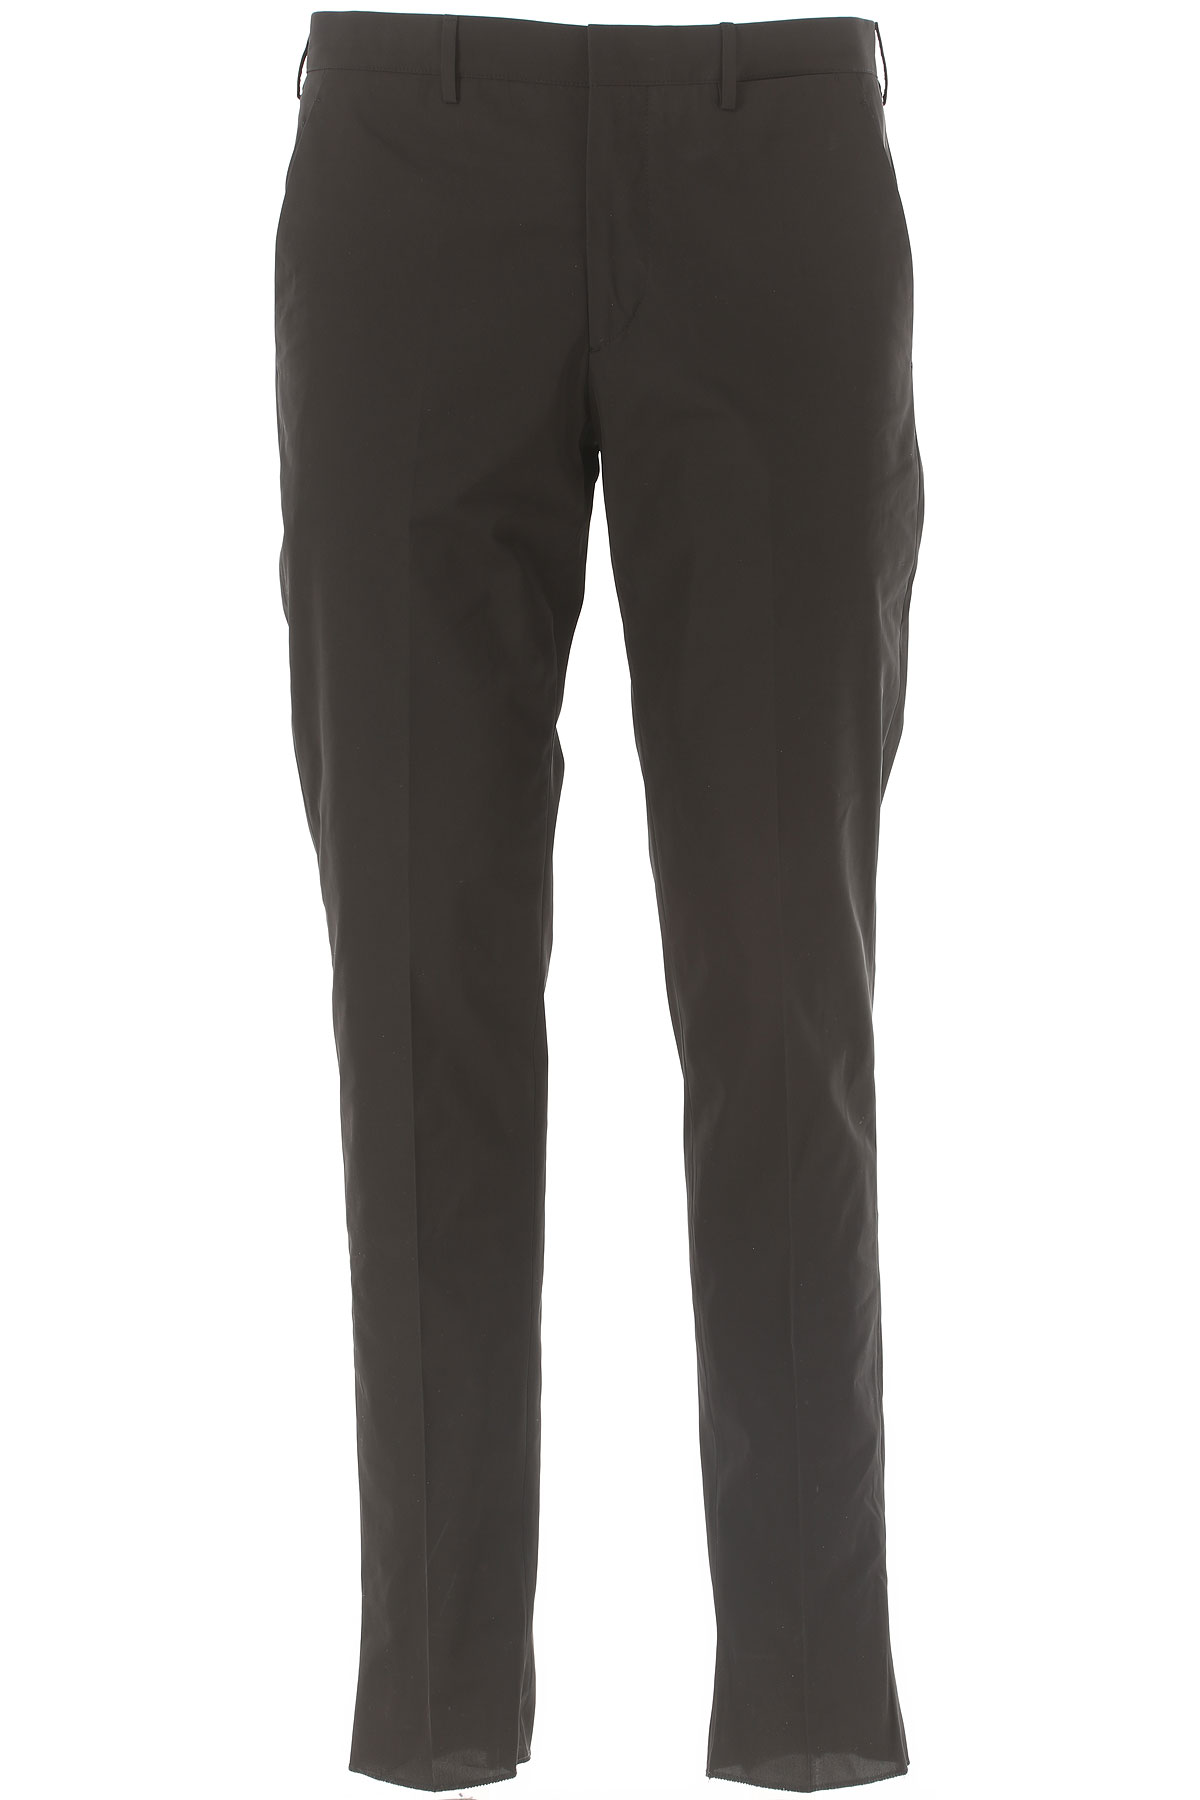 Prada Pantalon Homme Outlet, Noir, Polyester, 2017, 48 50 52